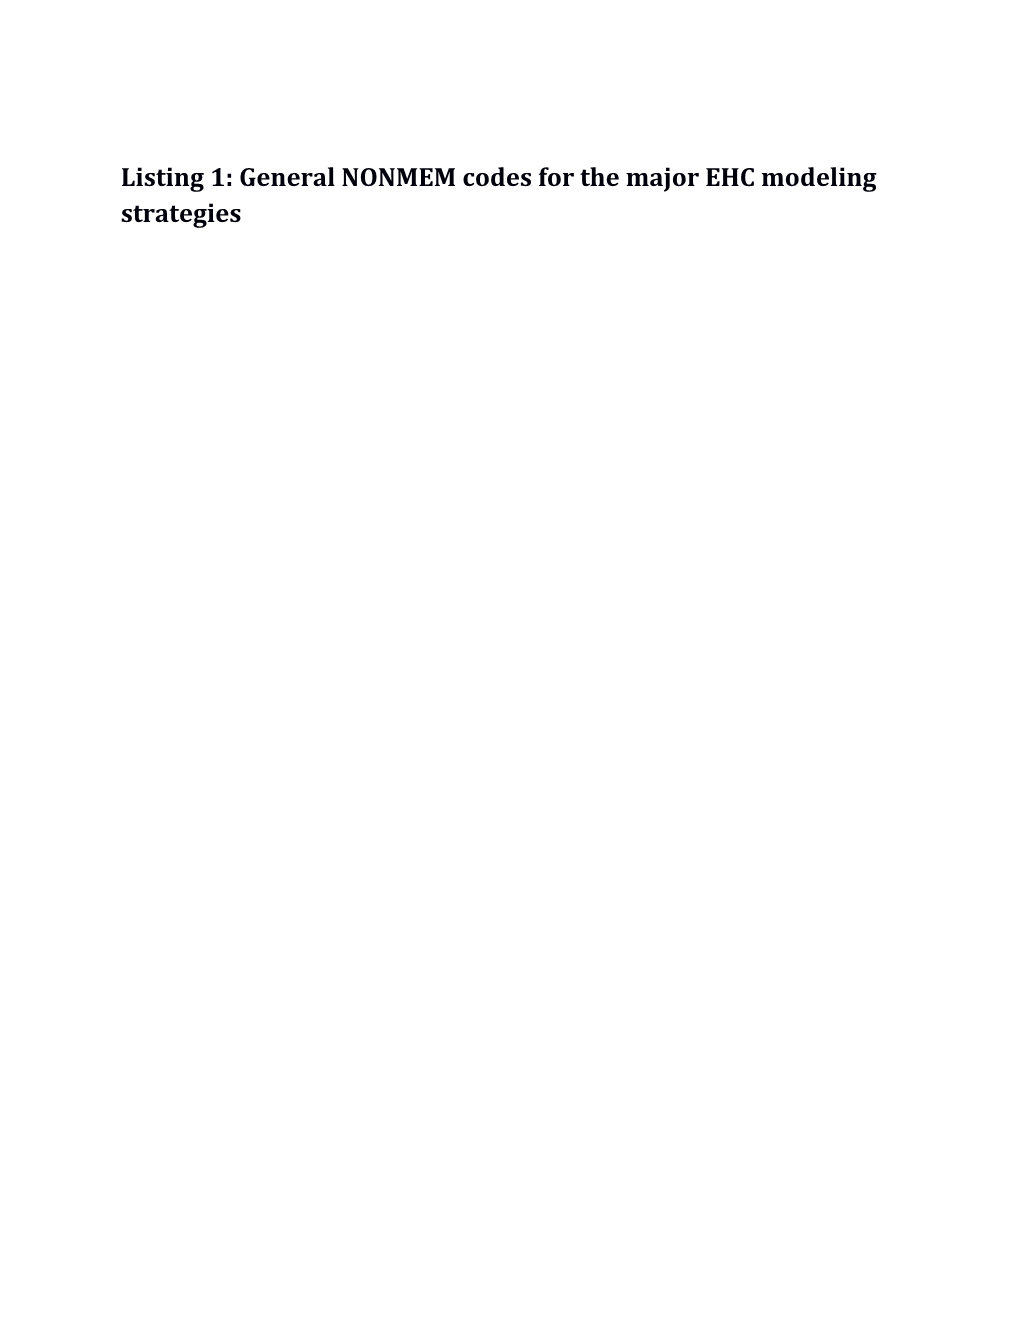 Listing 1: General NONMEM Codes for the Major EHC Modeling Strategies